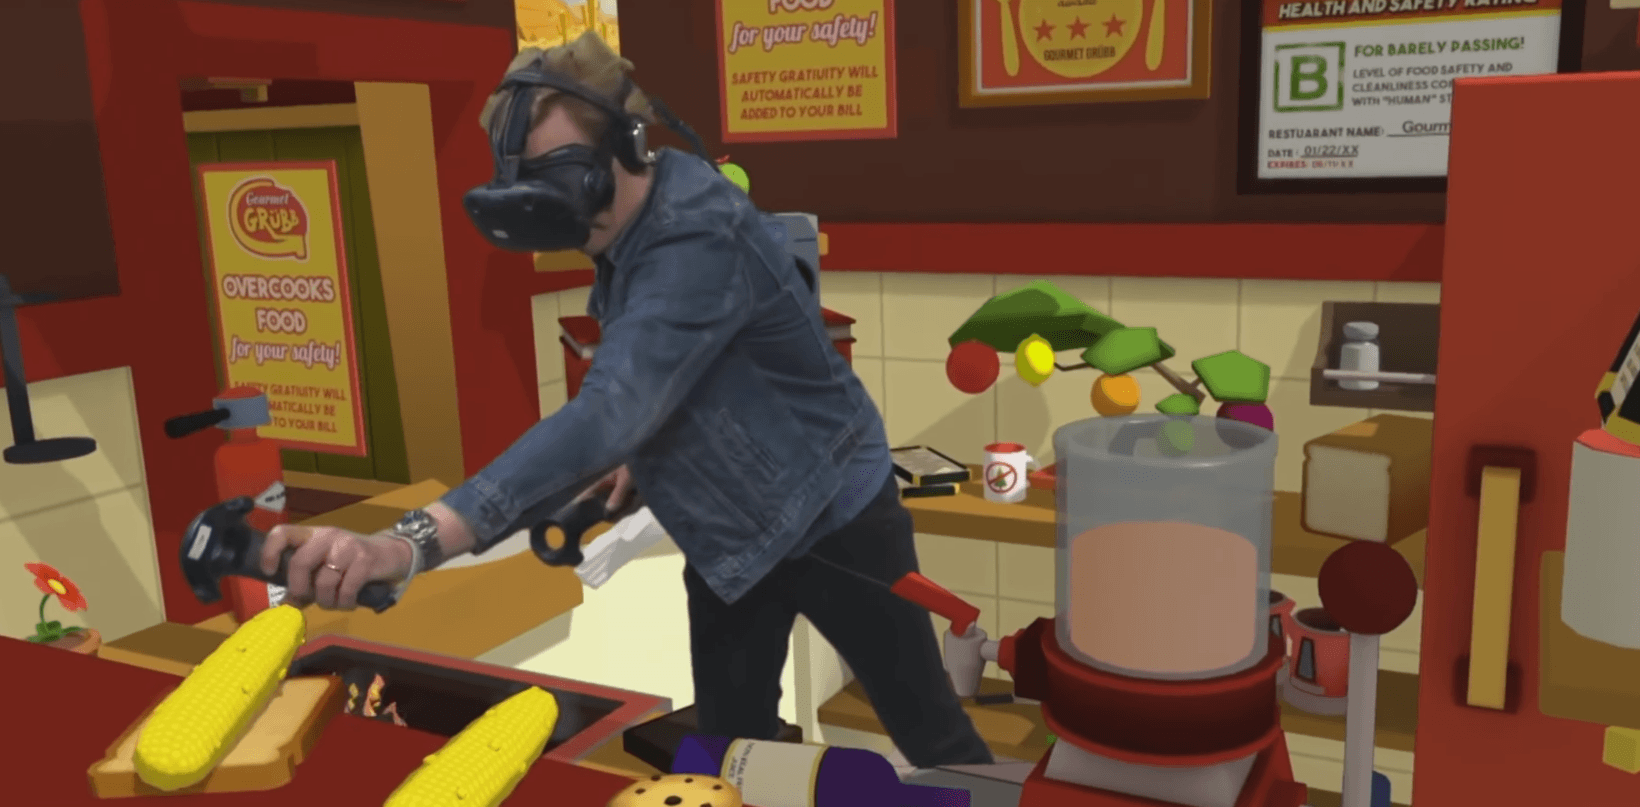 Ixixxx - Conan O'Brien takes a deep dive into virtual reality at the YouTube Lab